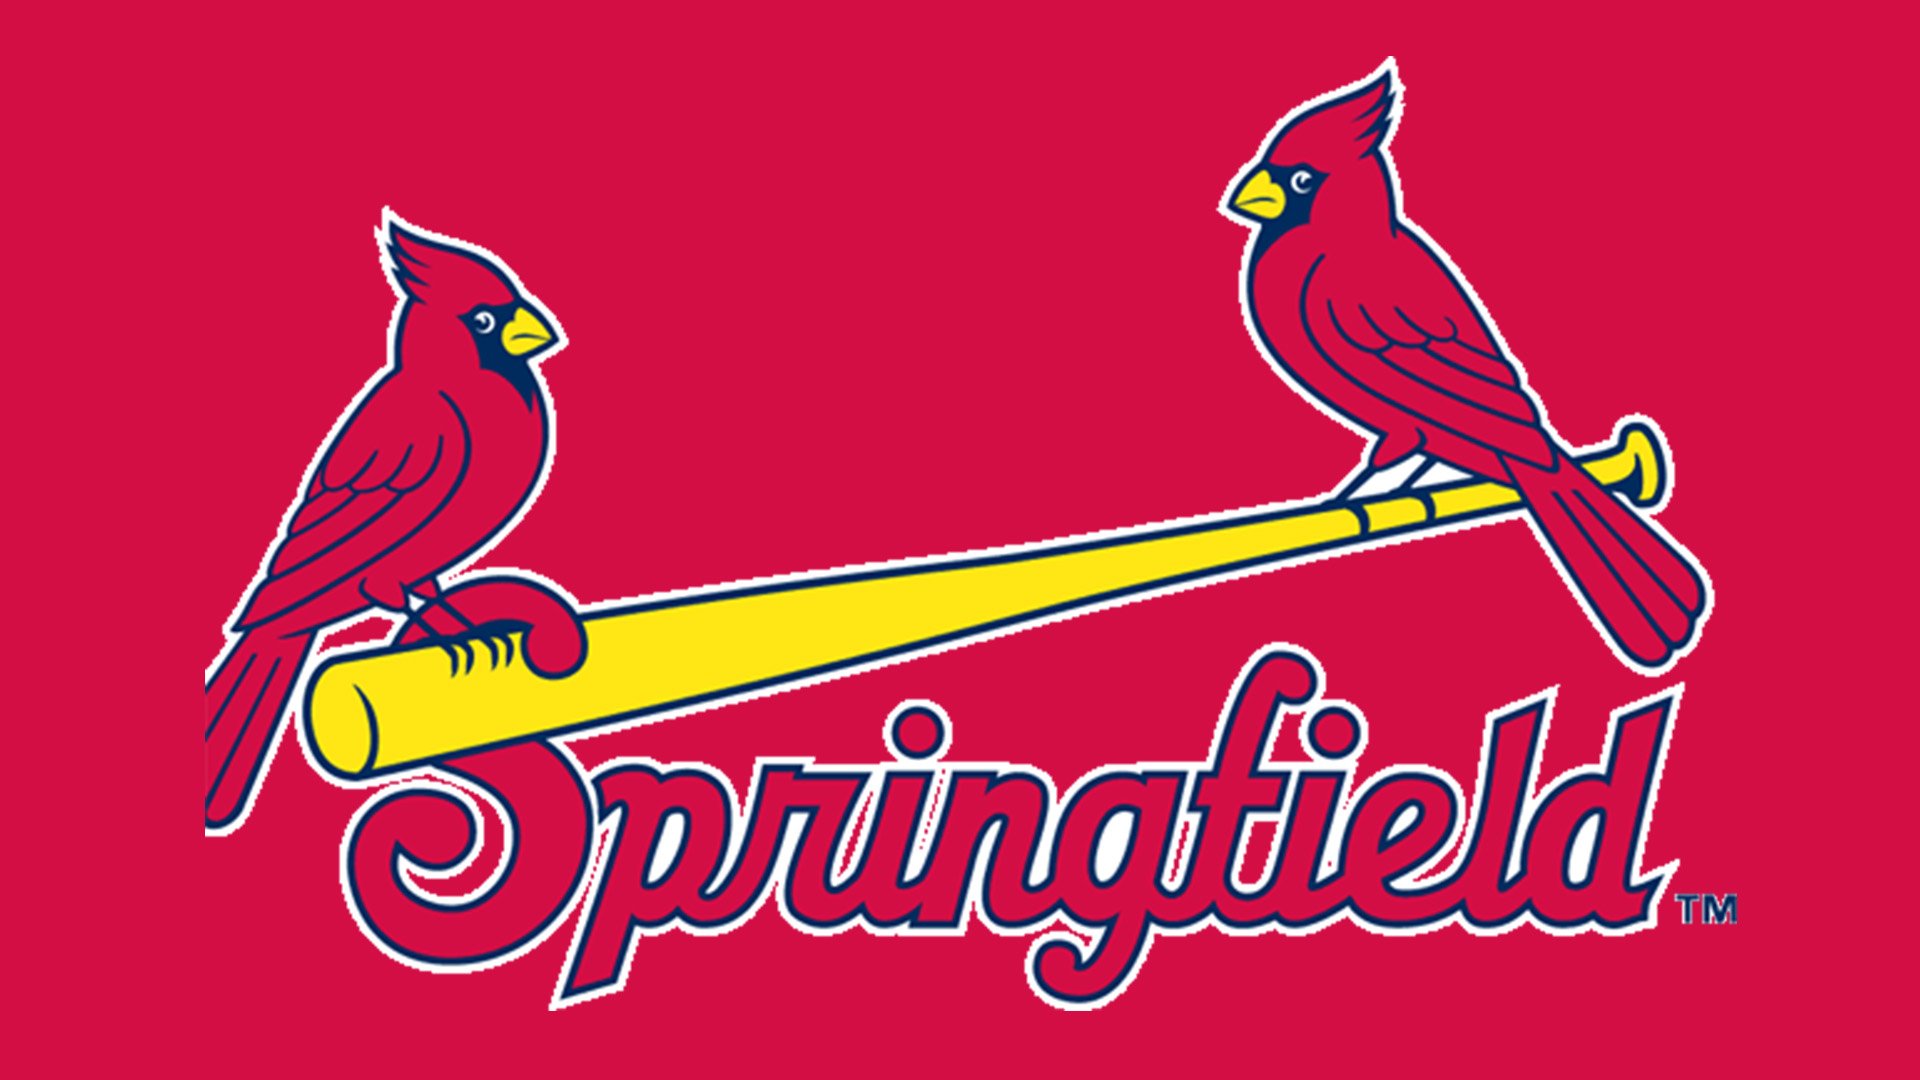 Baseball S-Bird Logo – Springfield Cardinals